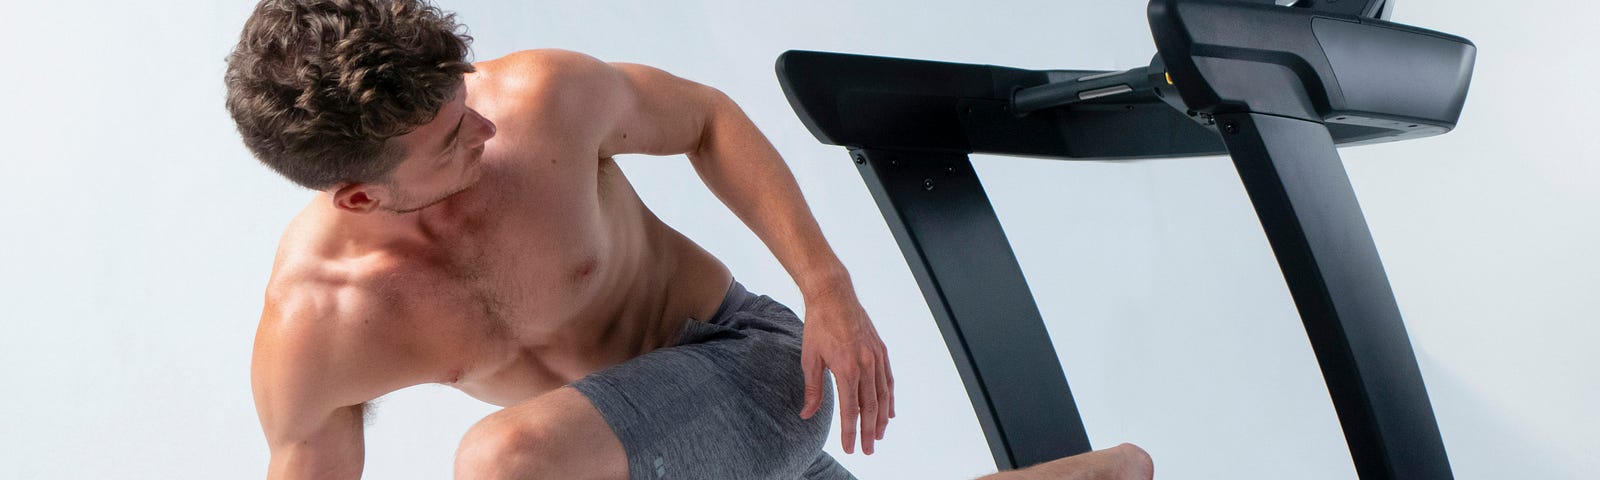 A man falling from a treadmill